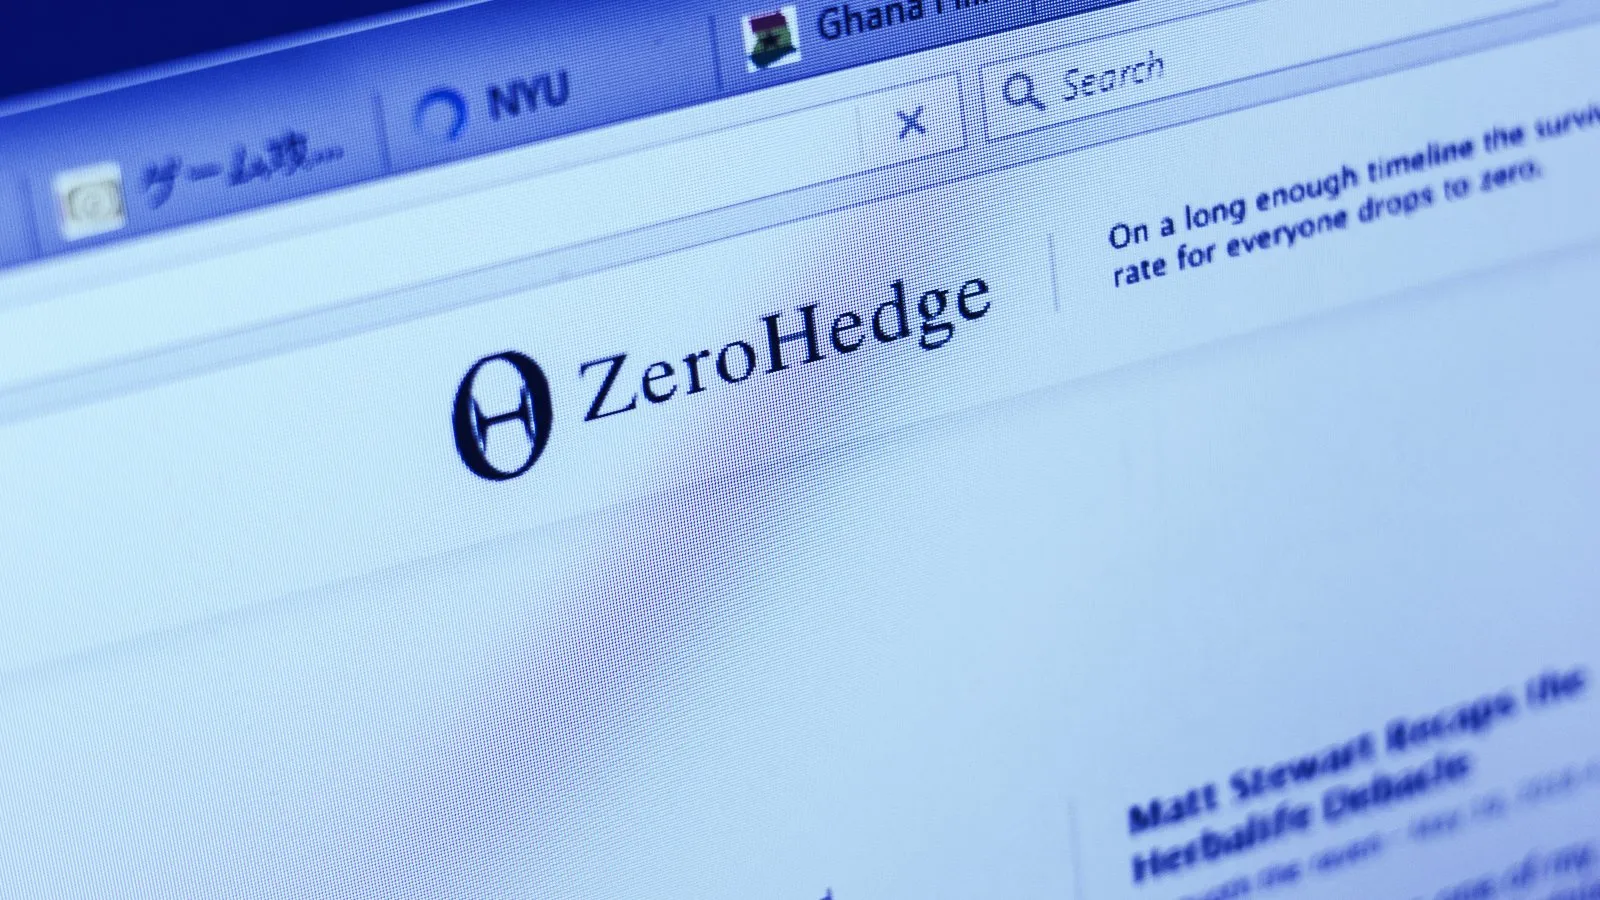 ZeroHedge banned from Google’s advertising platform. Image: Shutterstock